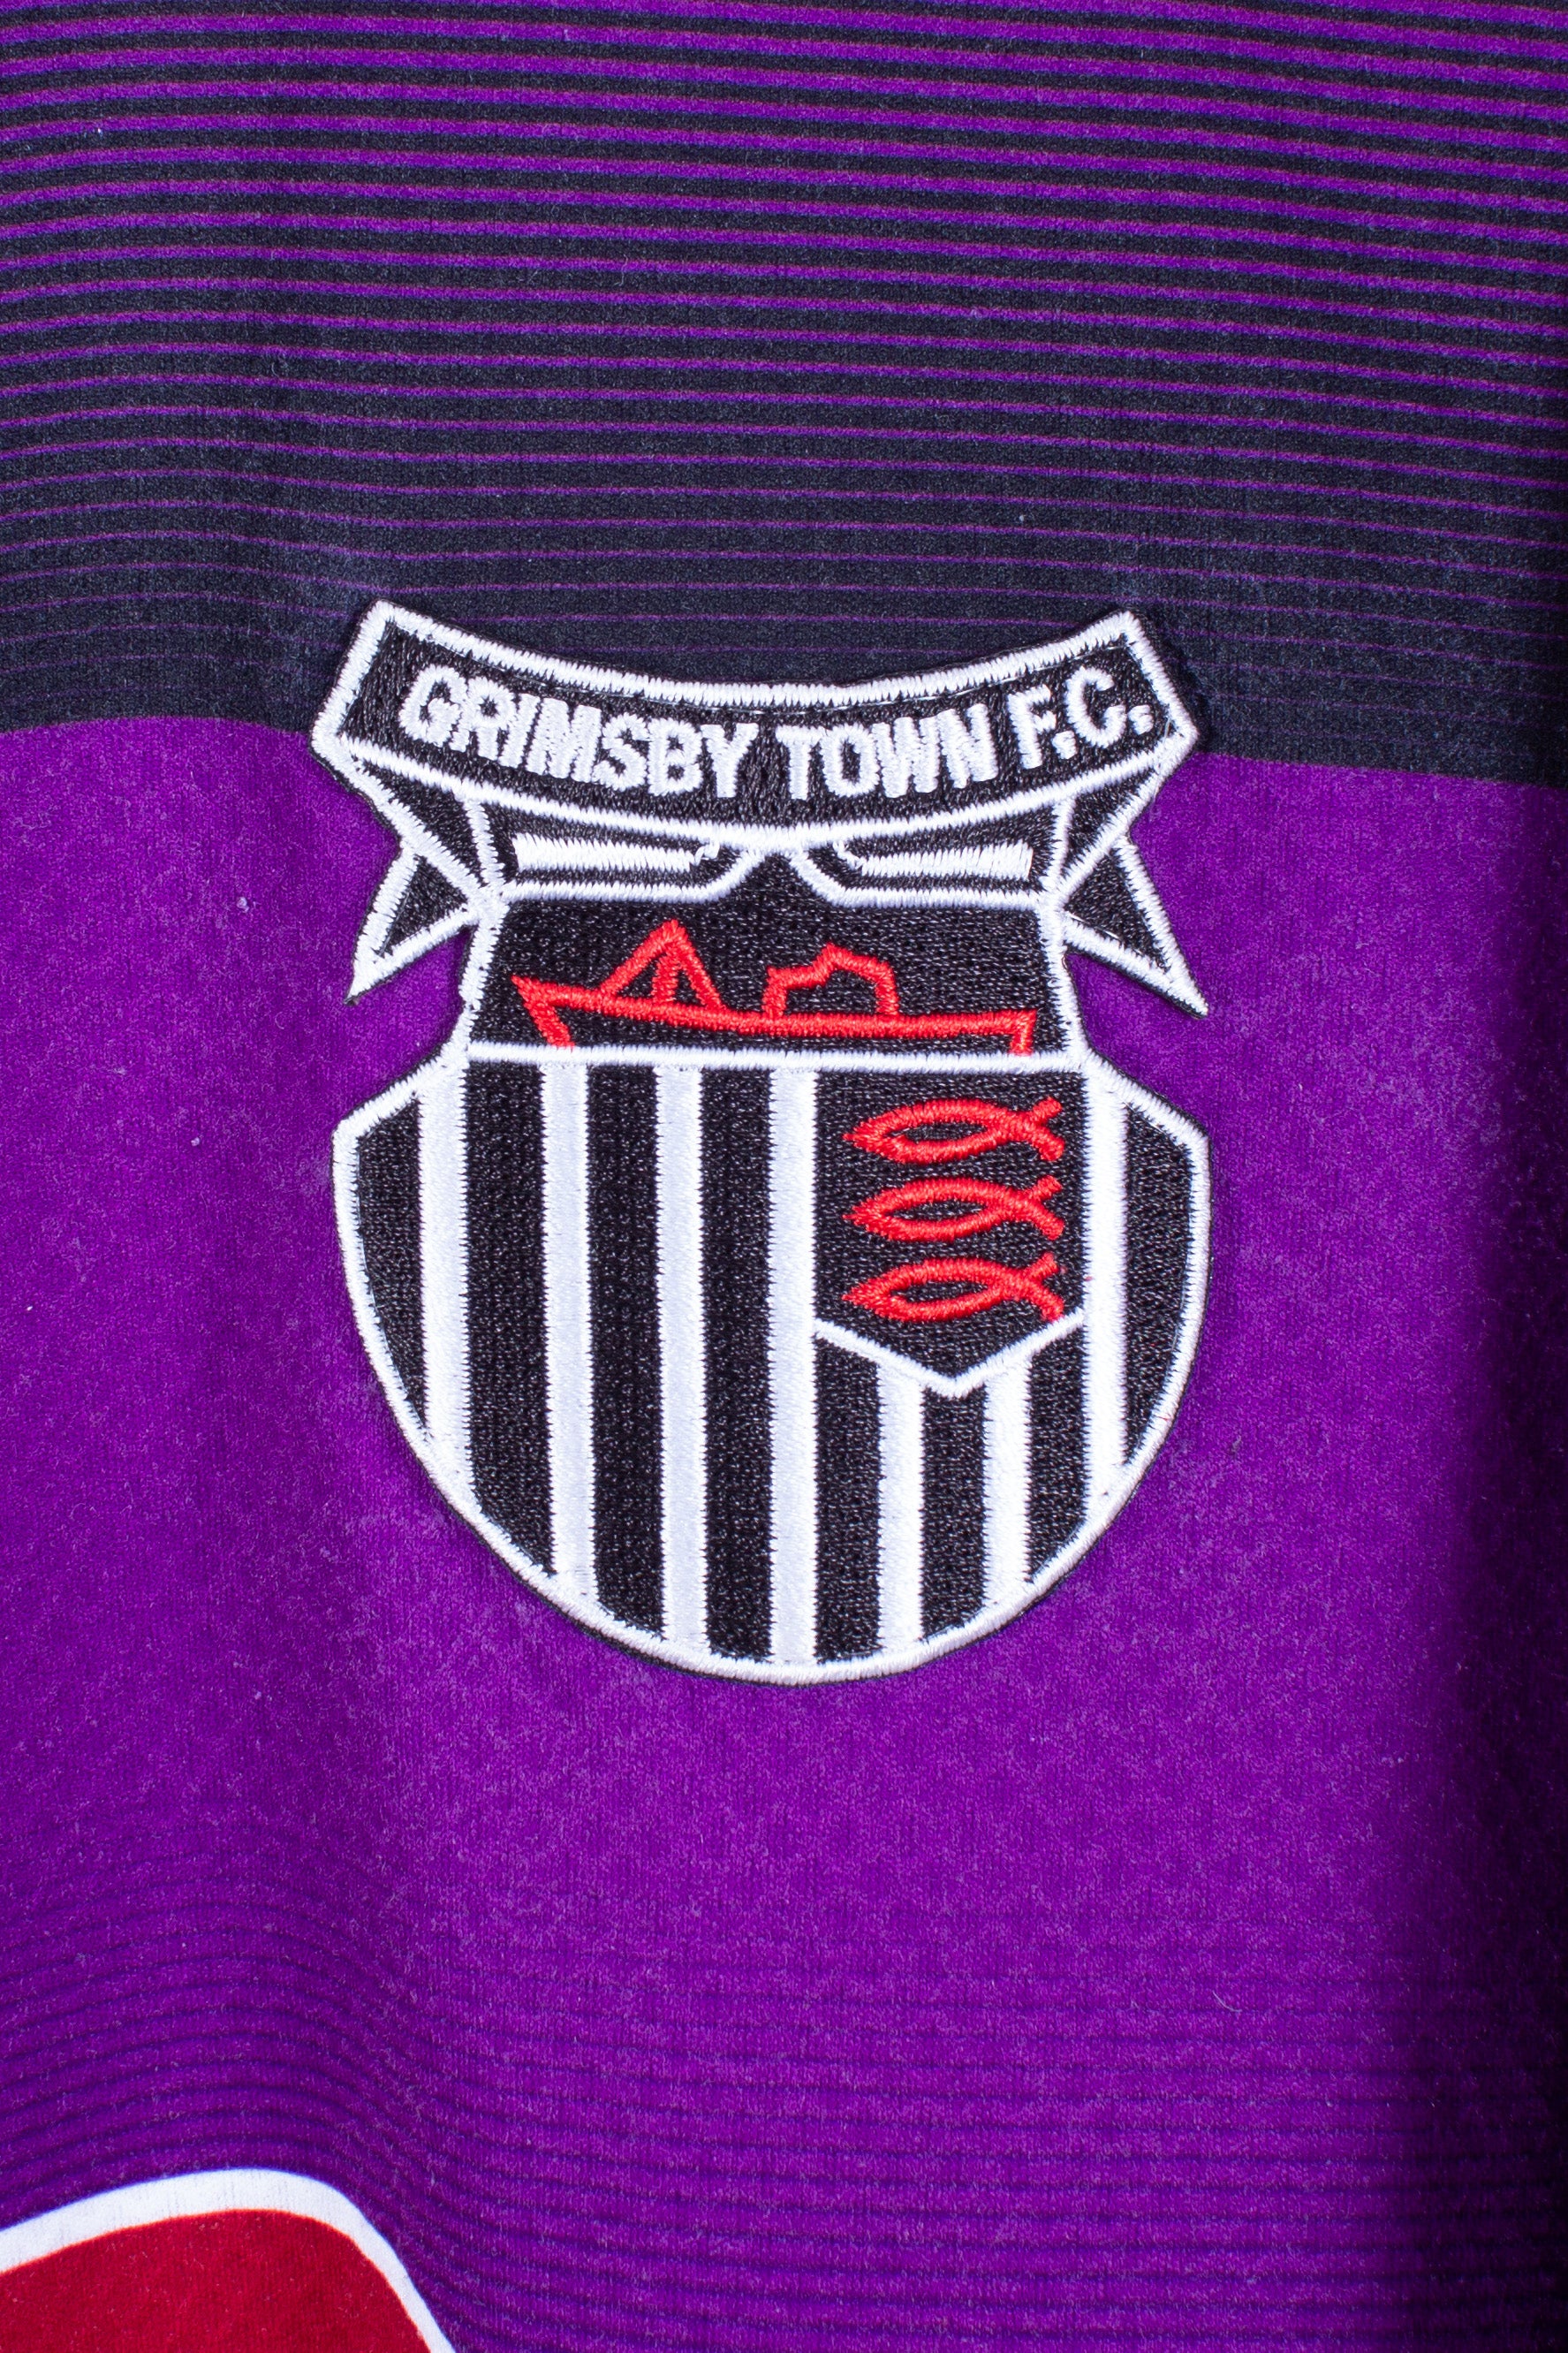 Grimsby Town 2018/19 Third Shirt